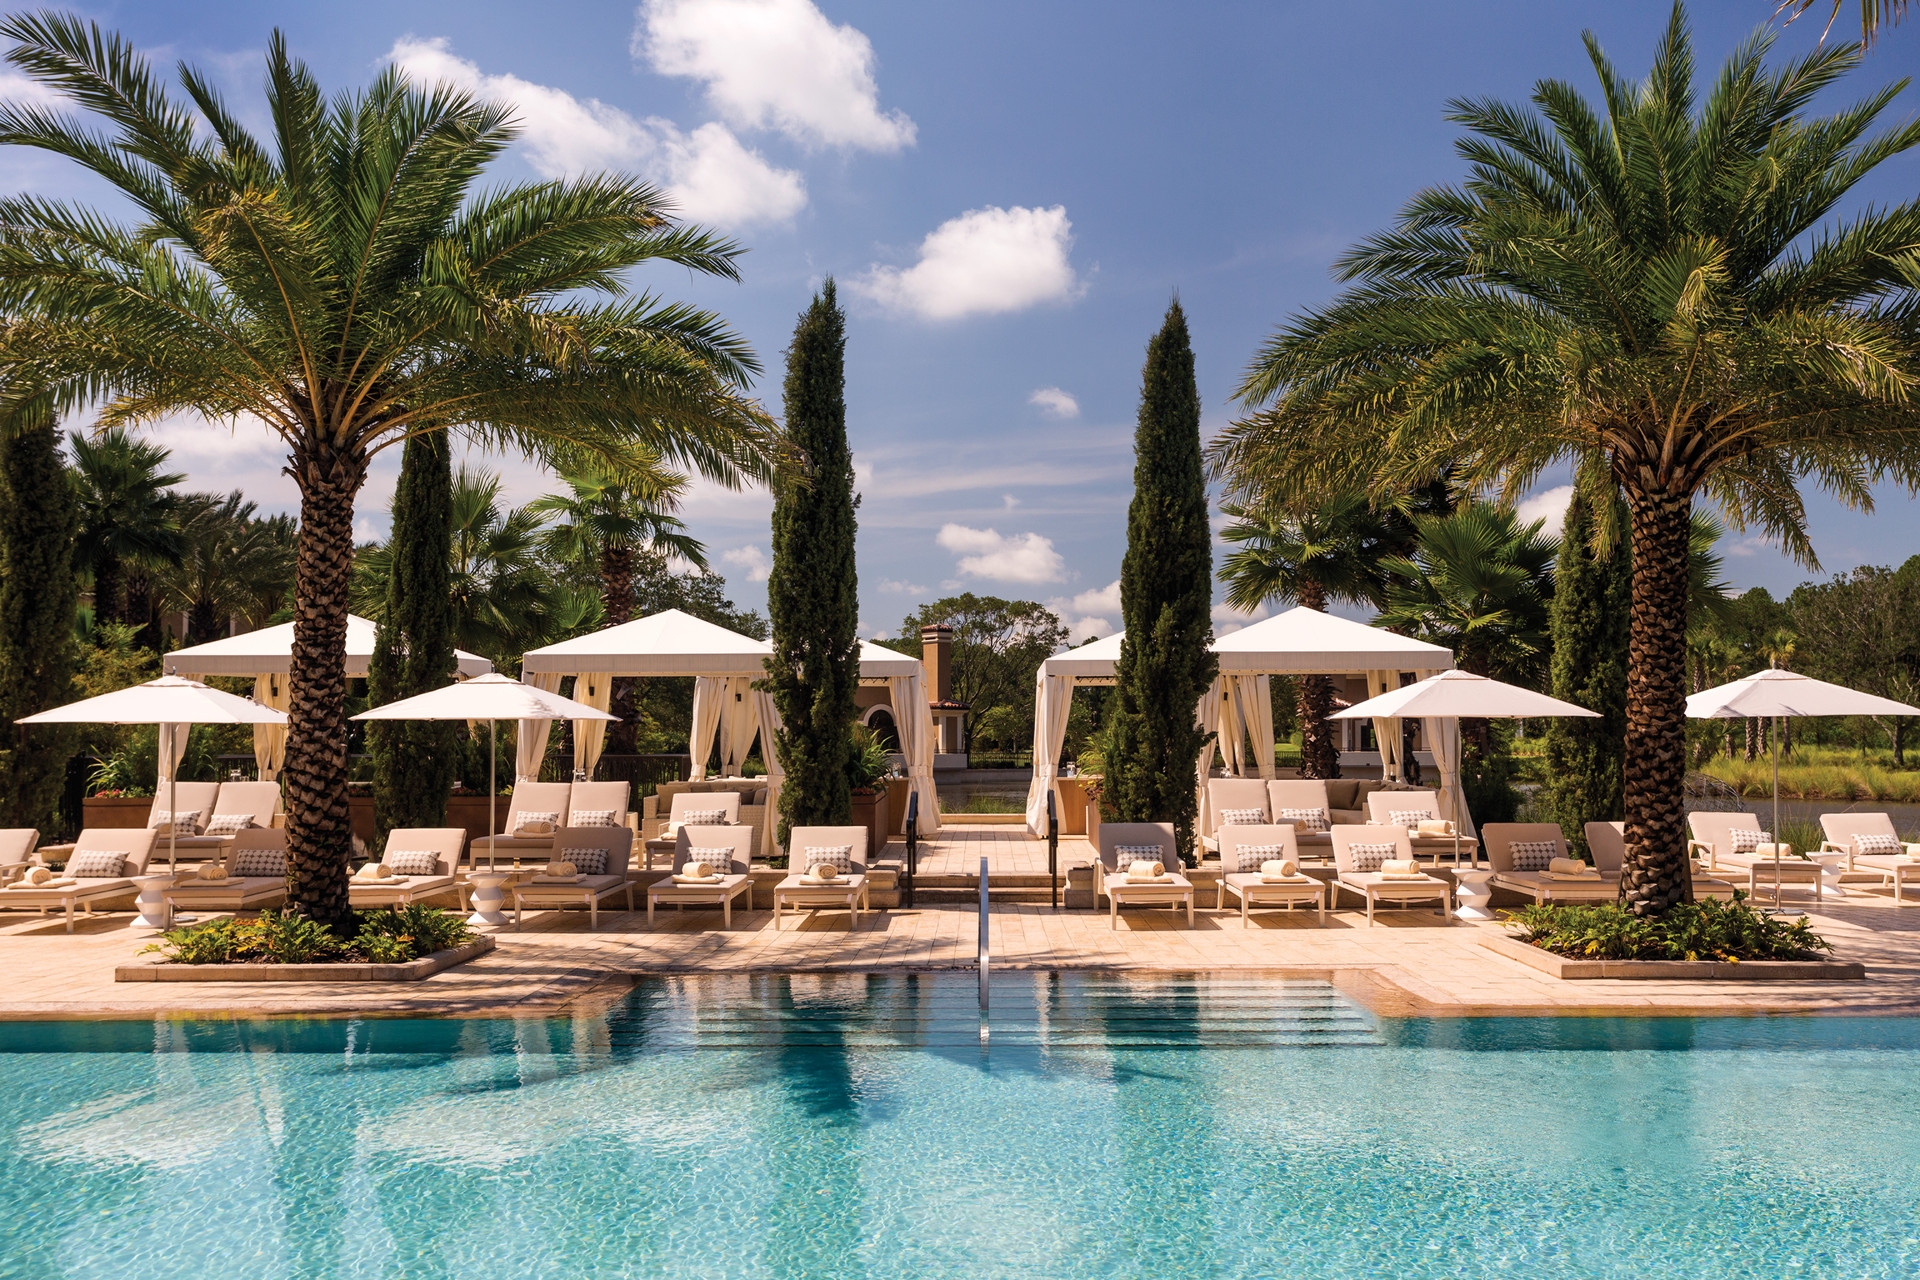 Four Seasons Orlando Pool